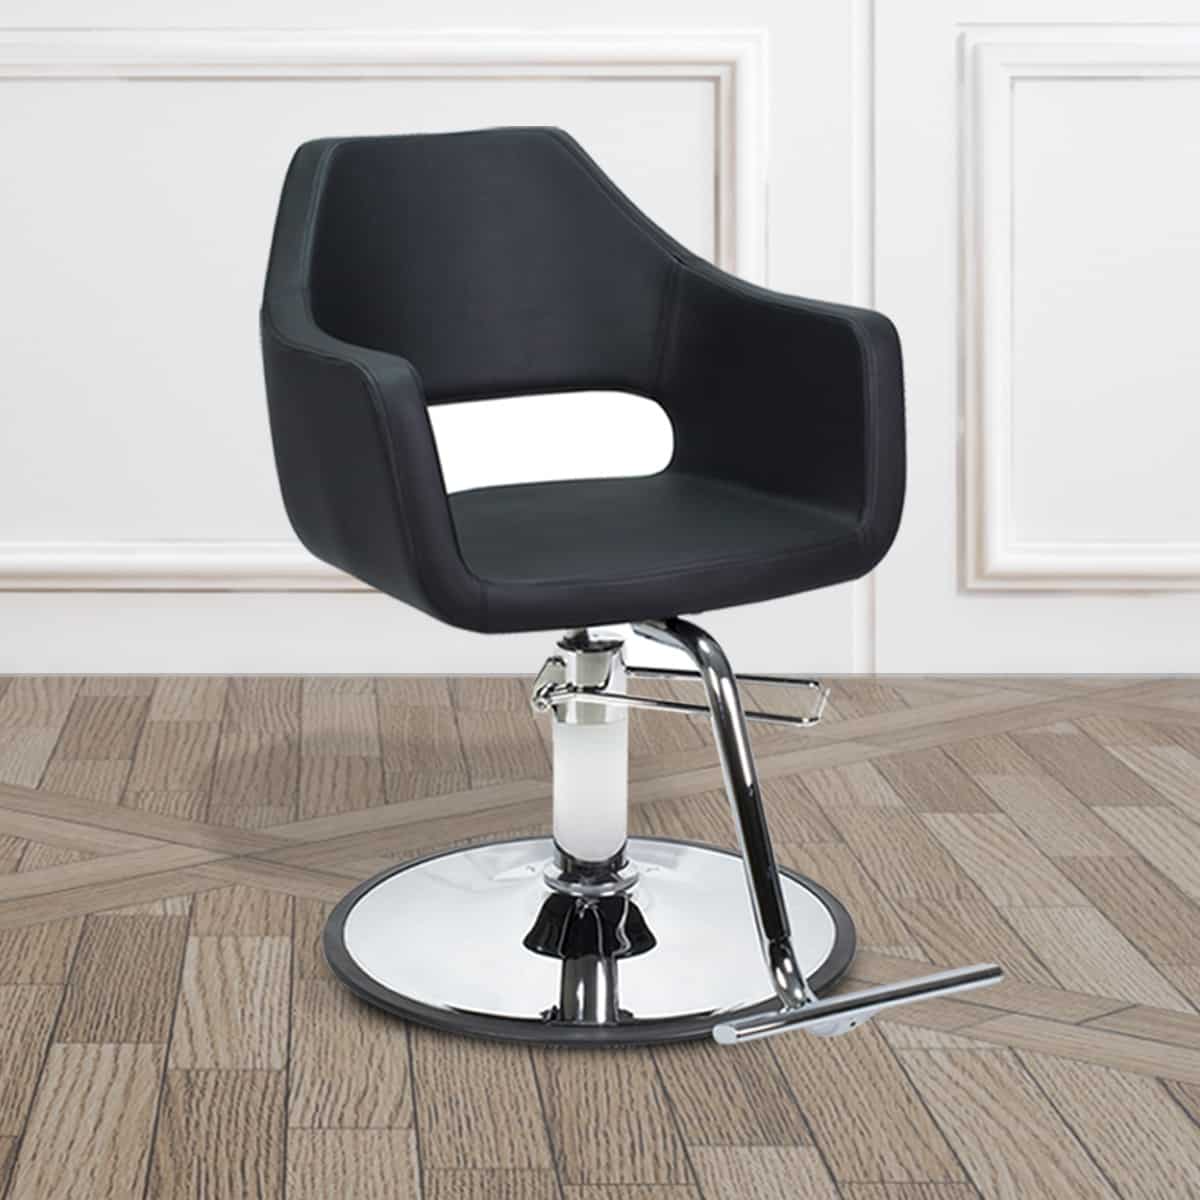 Salon Styling Chair RICHARDSON BLK for Beauty Salon Furniture - 26" x 23"